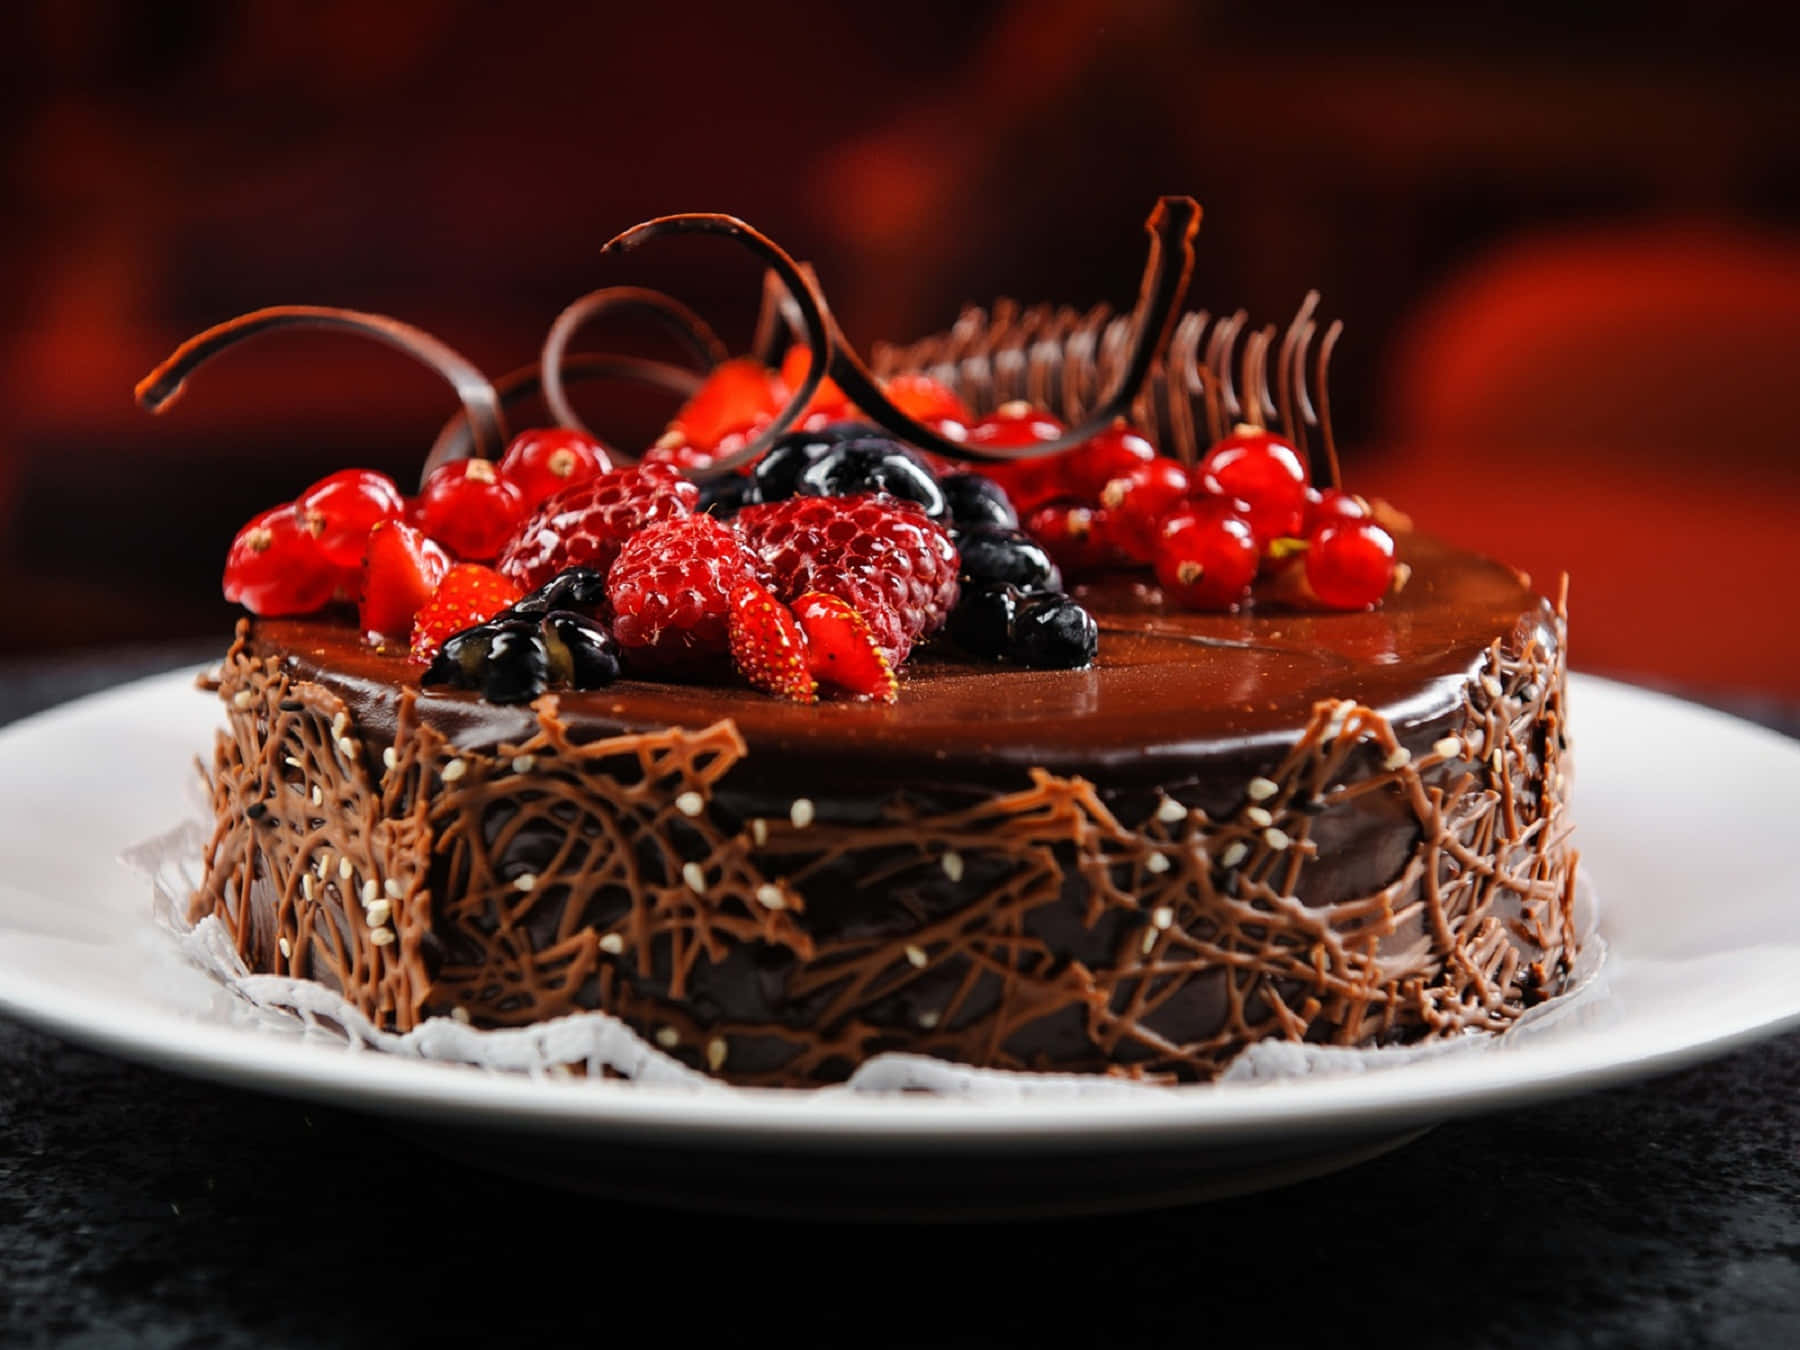 Yummy Chocolate Cake With Fruits Background